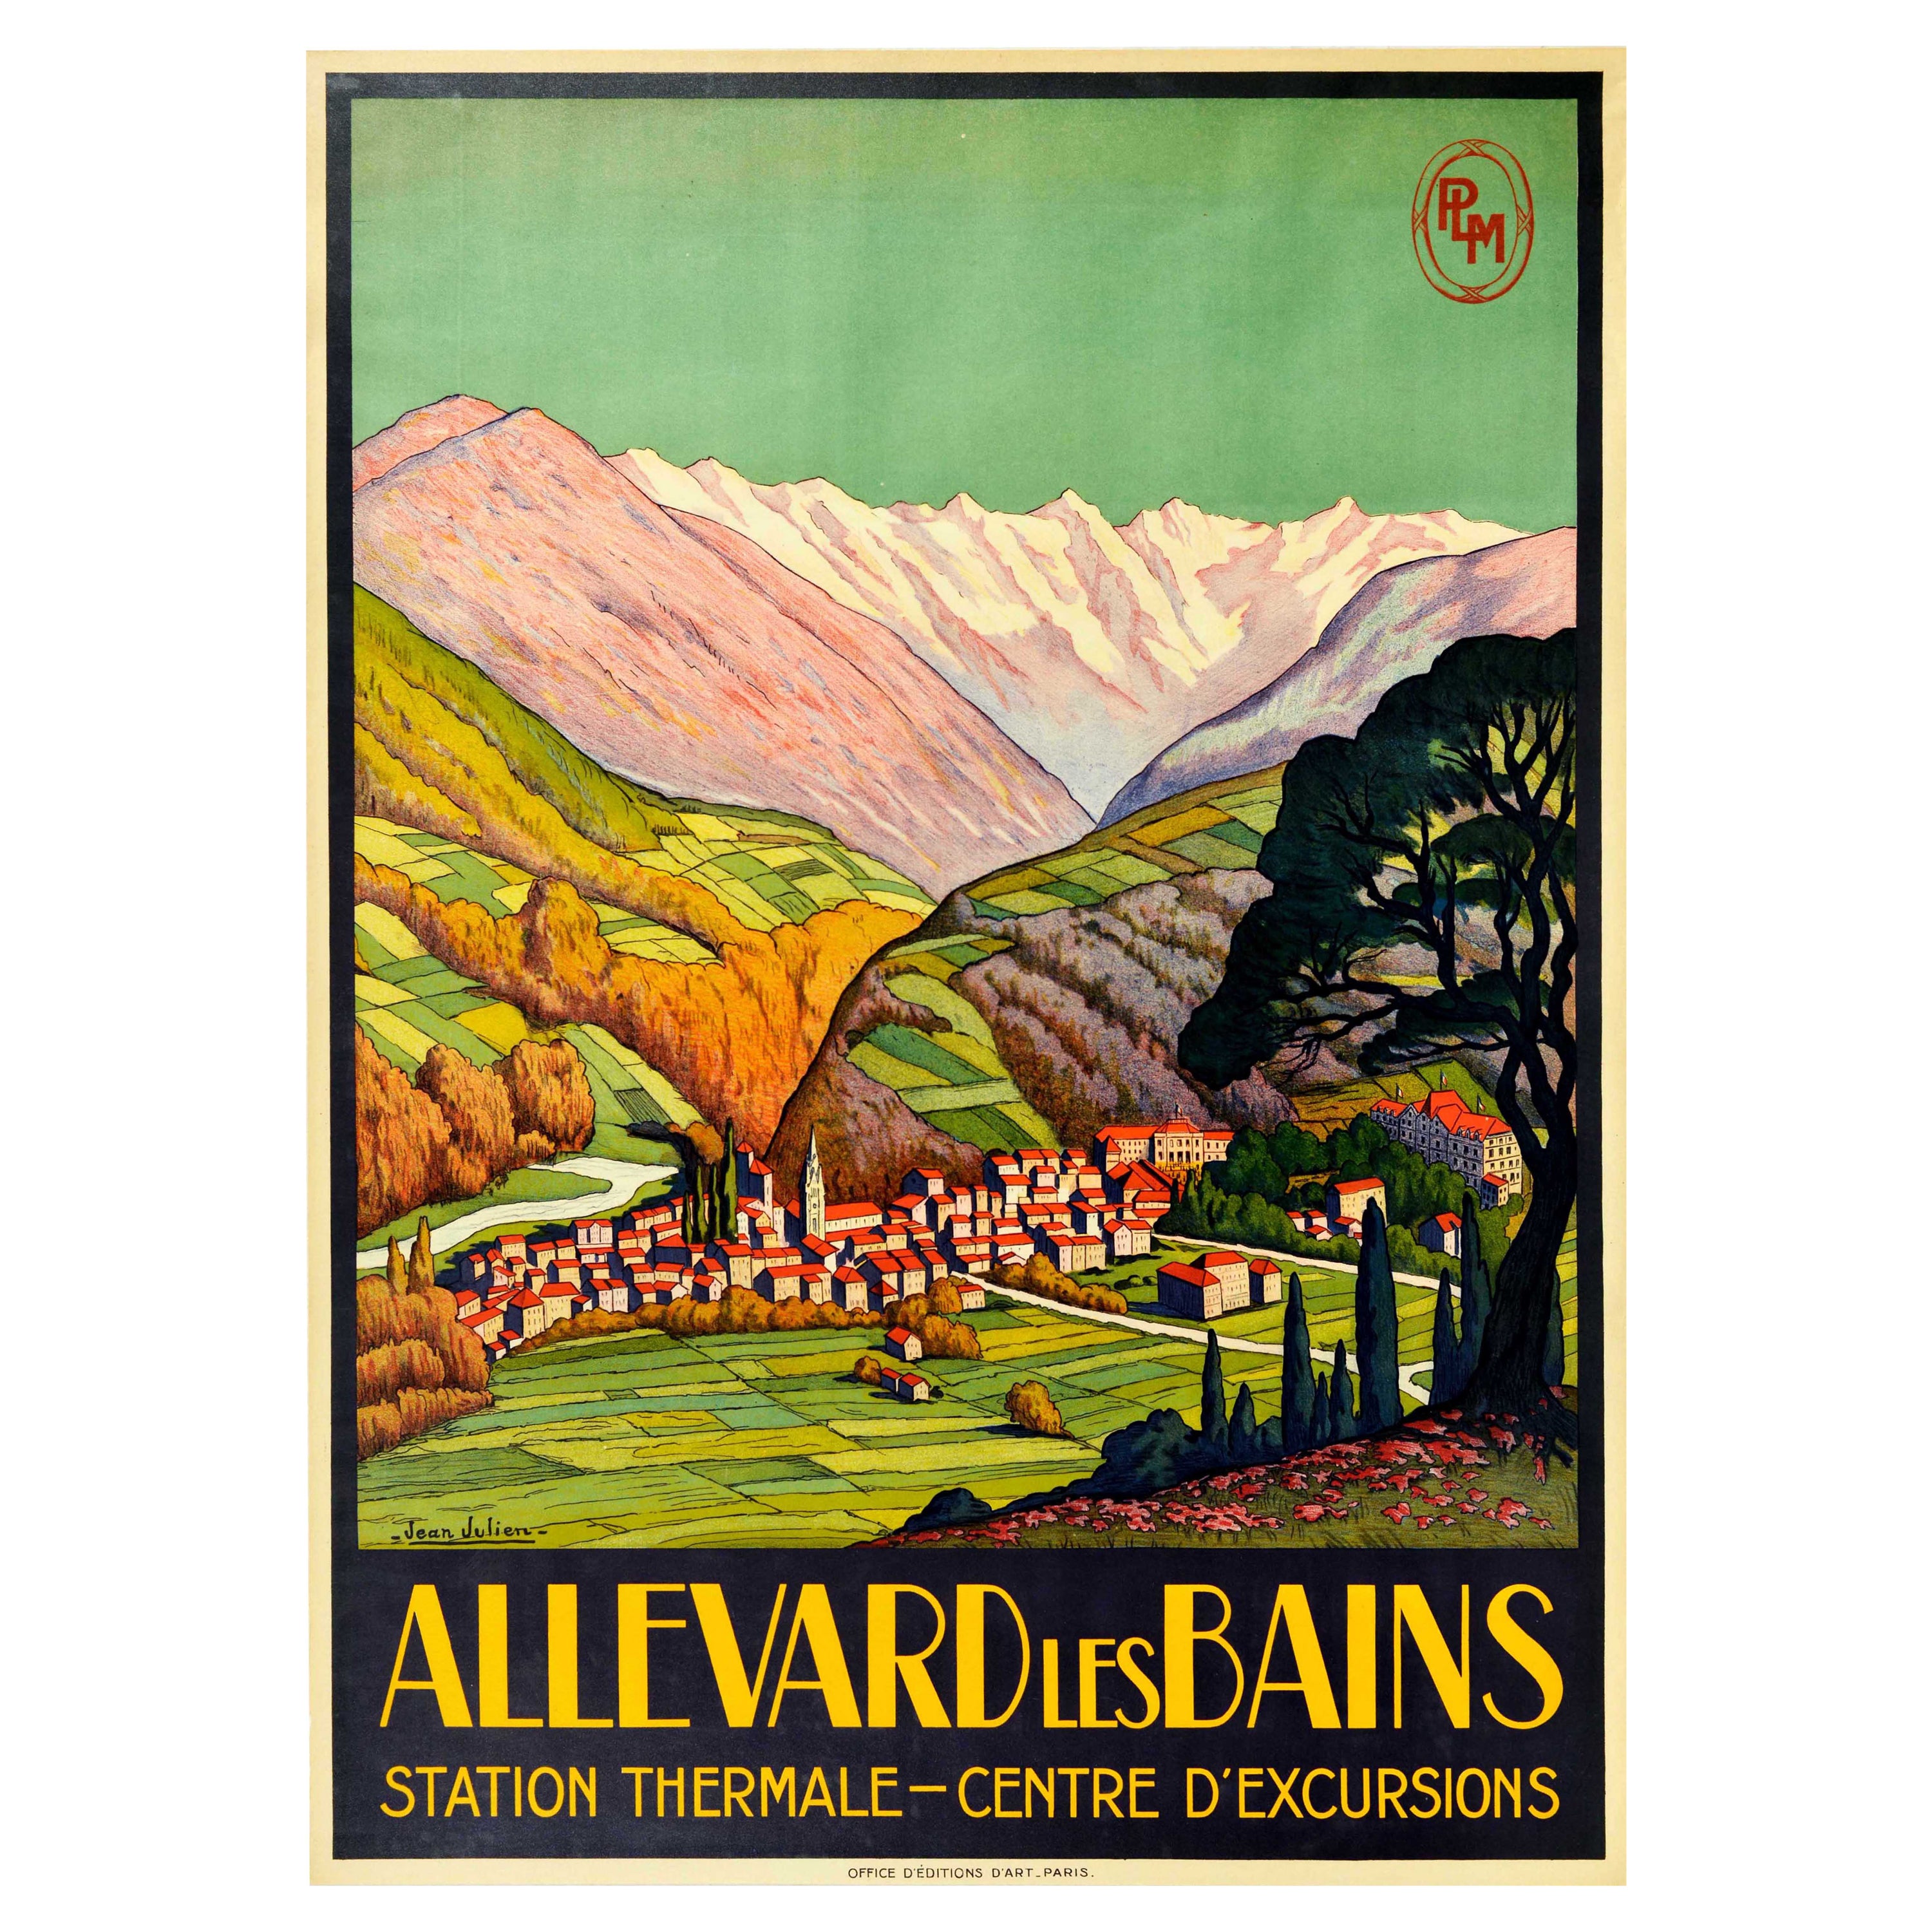 Original Vintage PLM Railway Travel Poster Allevard Les Bains Thermal Spa Alps